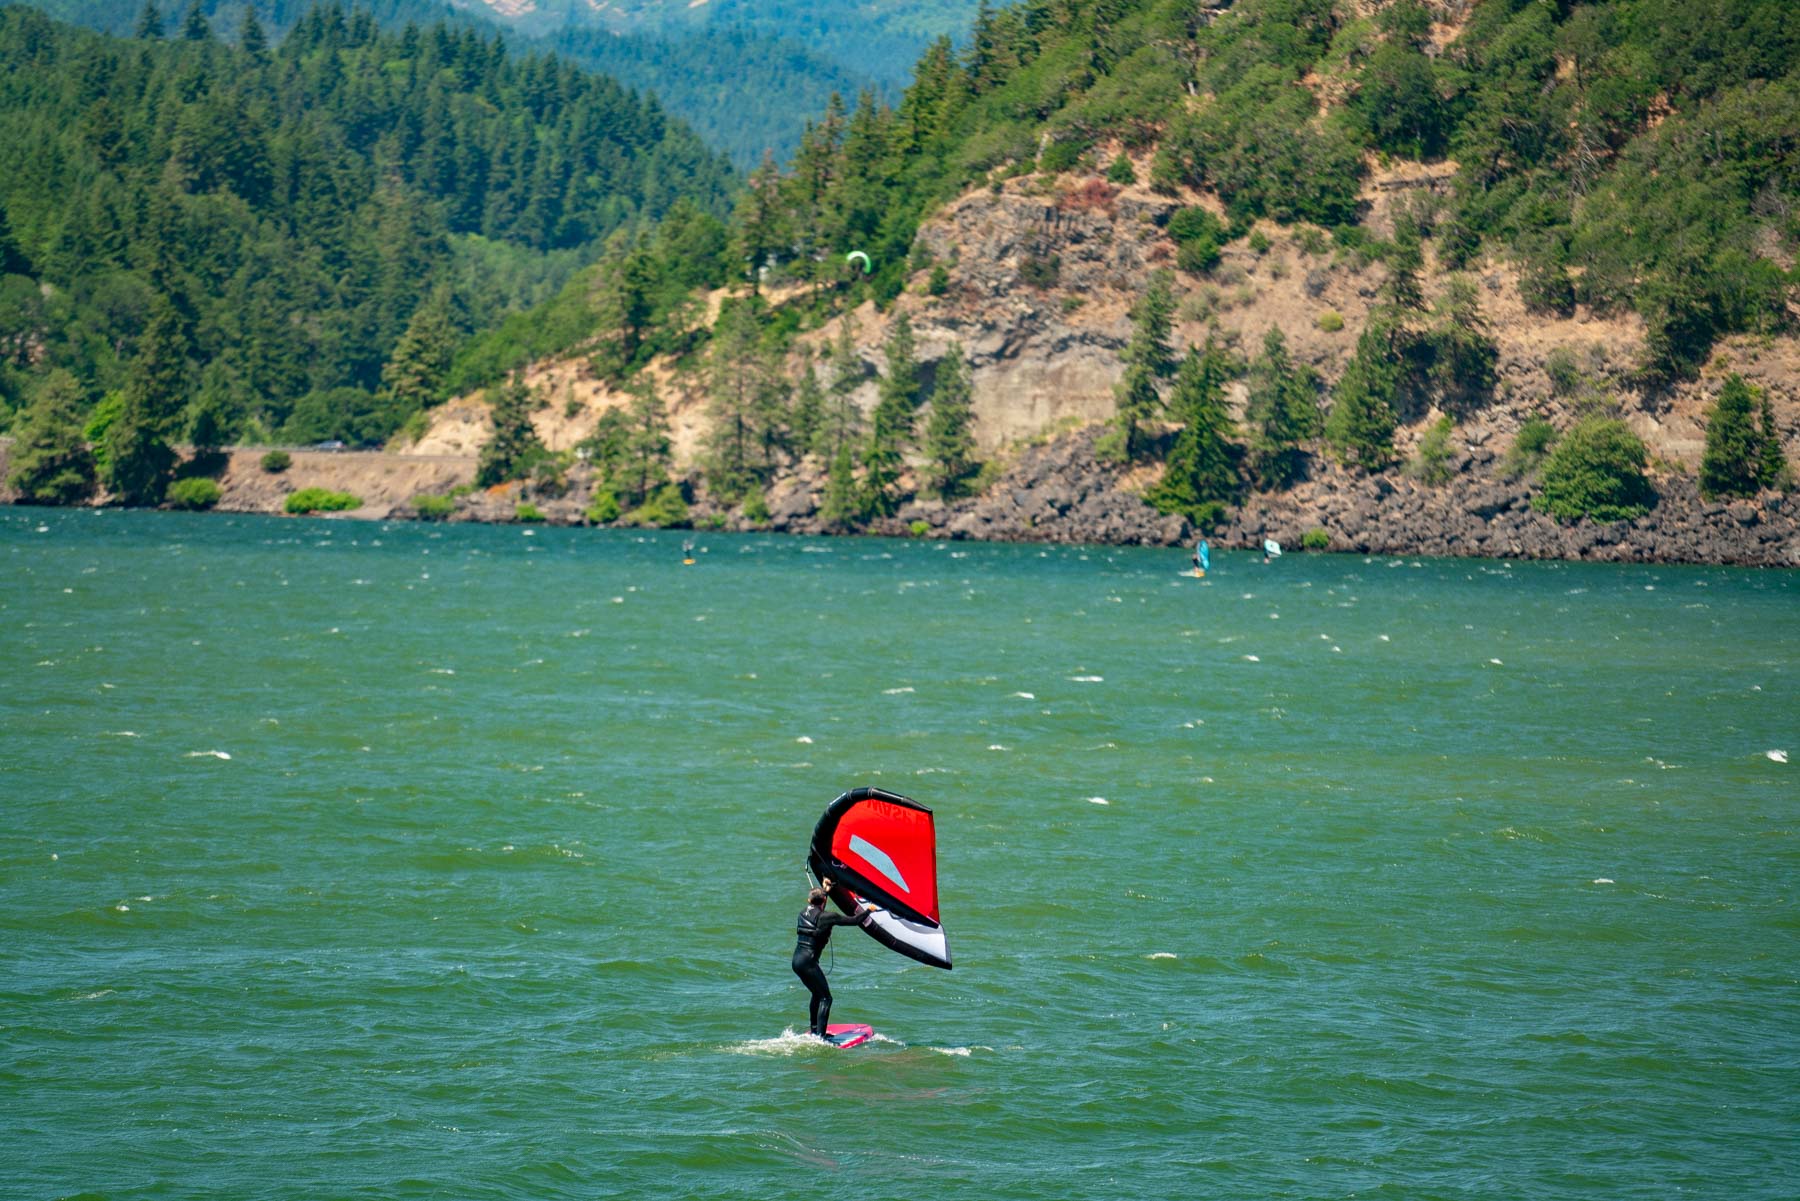 Windsurfing in Hood River Oregon